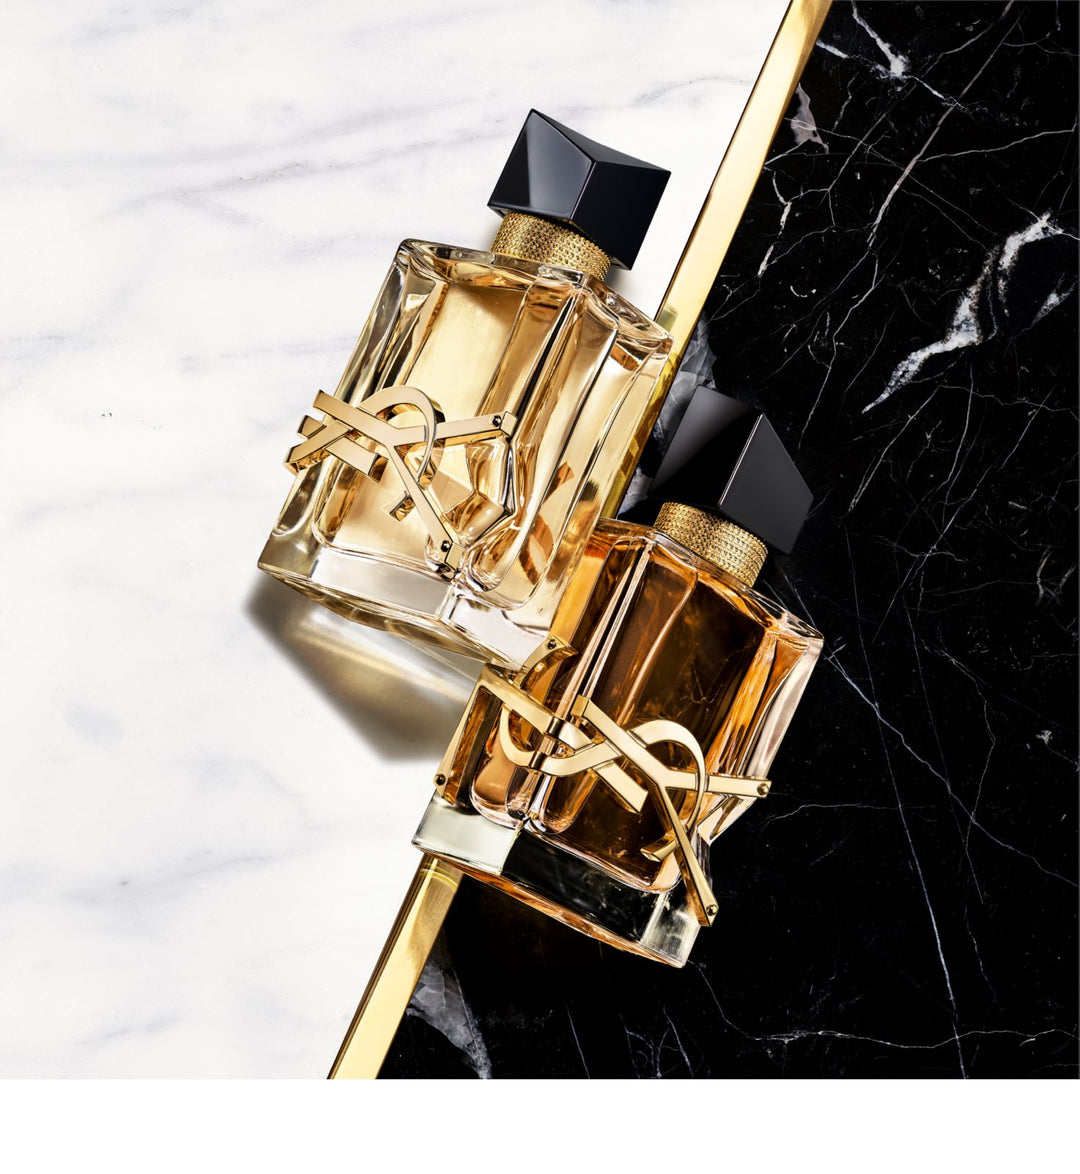 Dua Lipa for Yves Saint Laurent 'Libre' Fragrance Campaign 